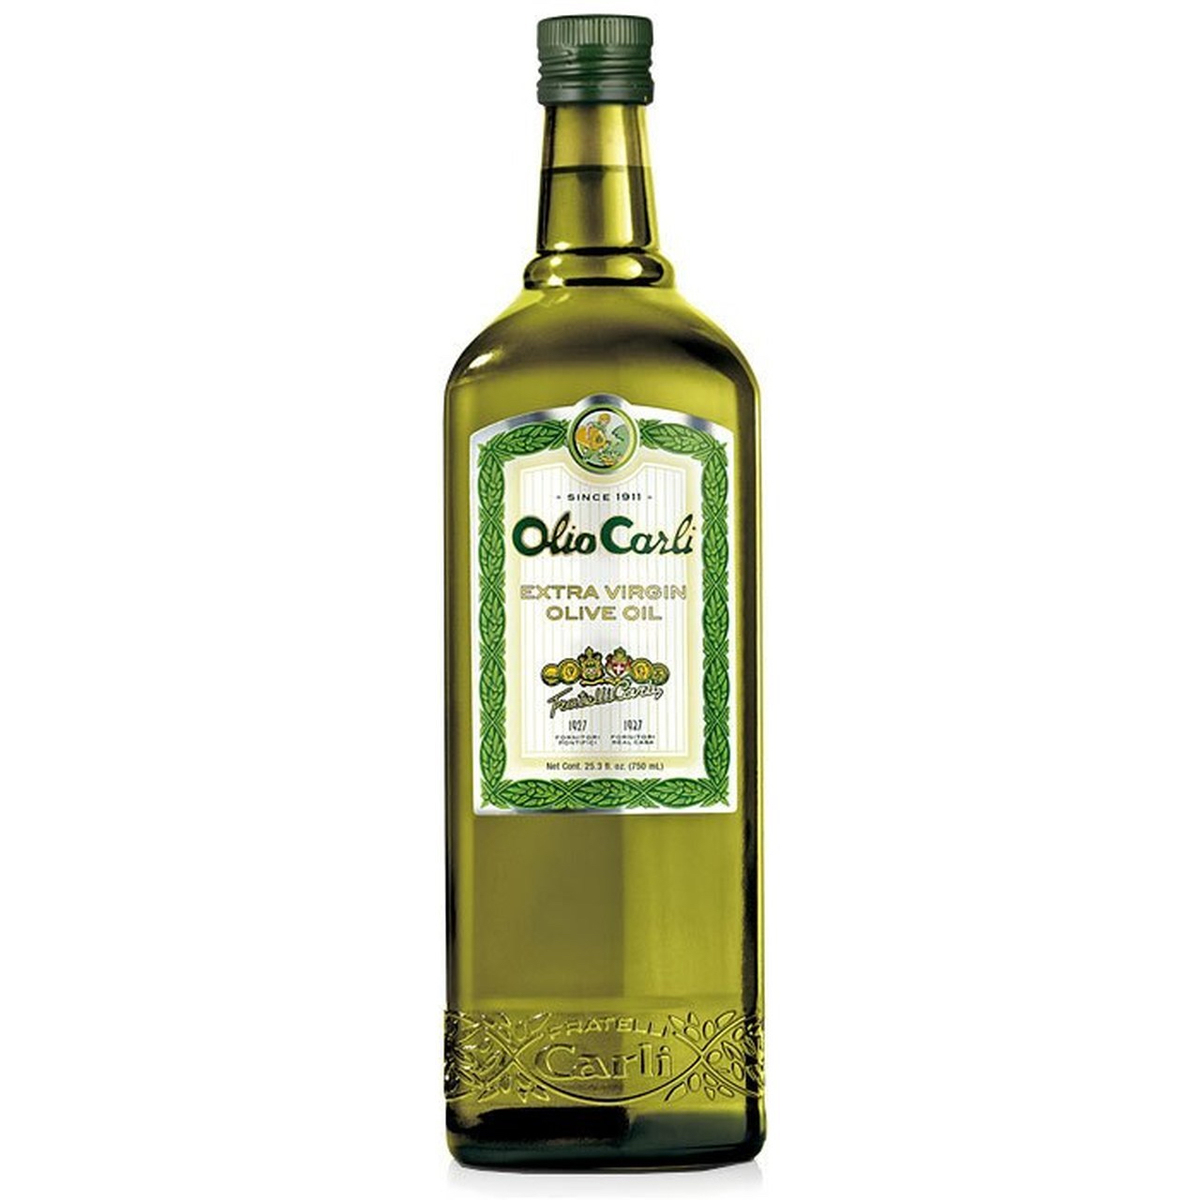 Carli - Extra Virgin Olive Oil - 750ml